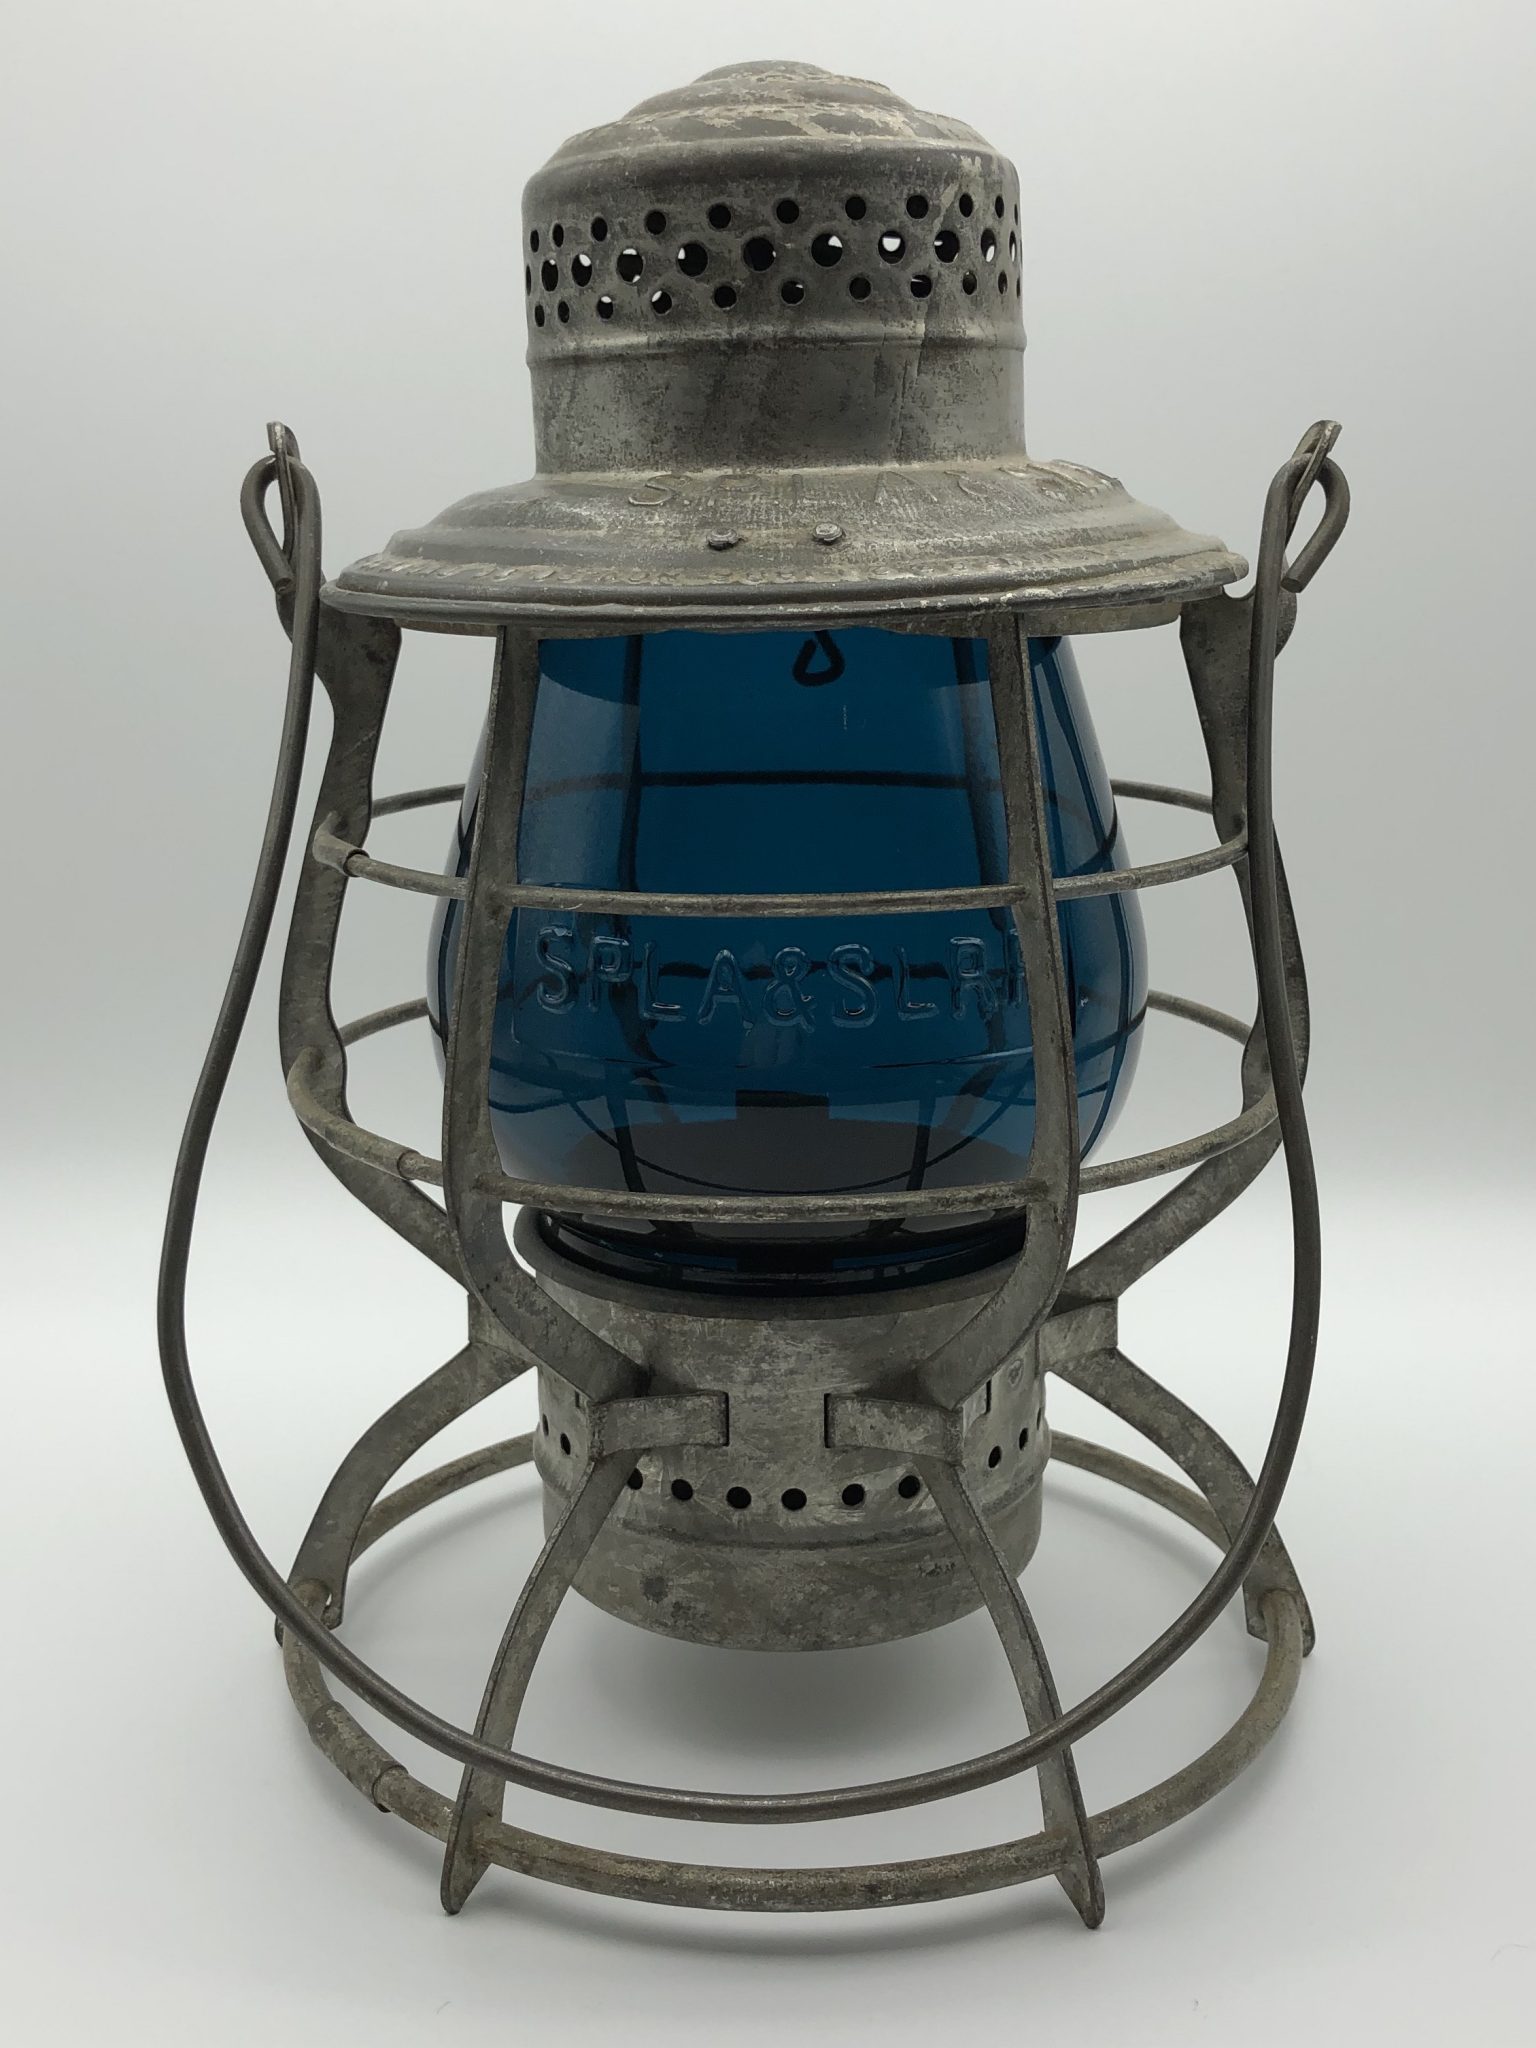 spla&slrr railroad lantern-antique-railroadiana